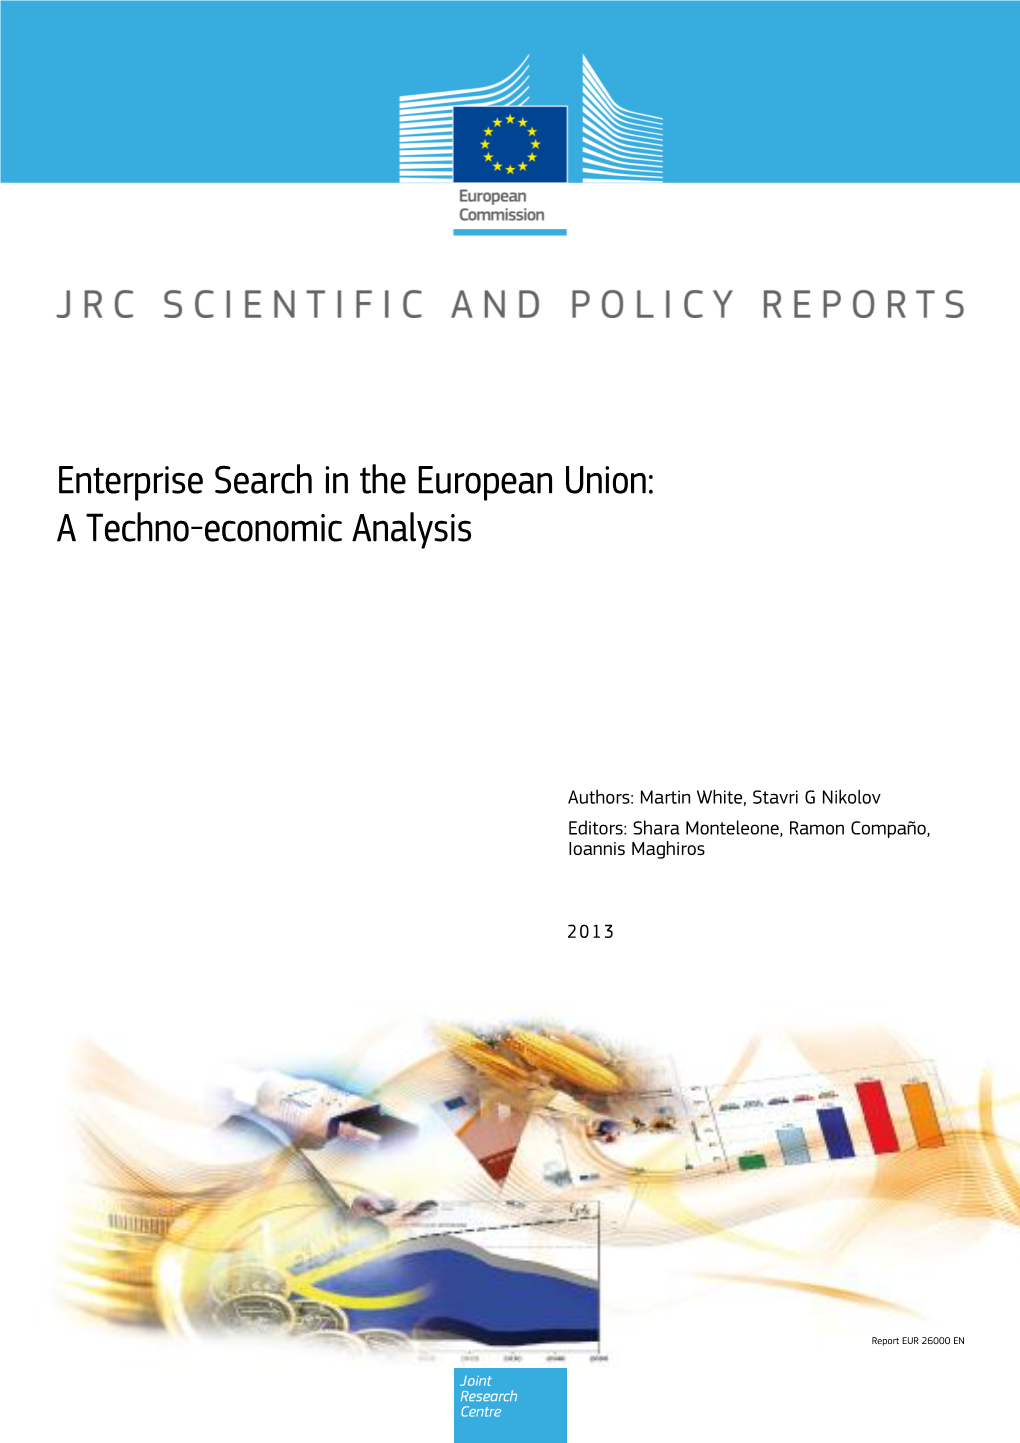 Enterprise Search in the European Union